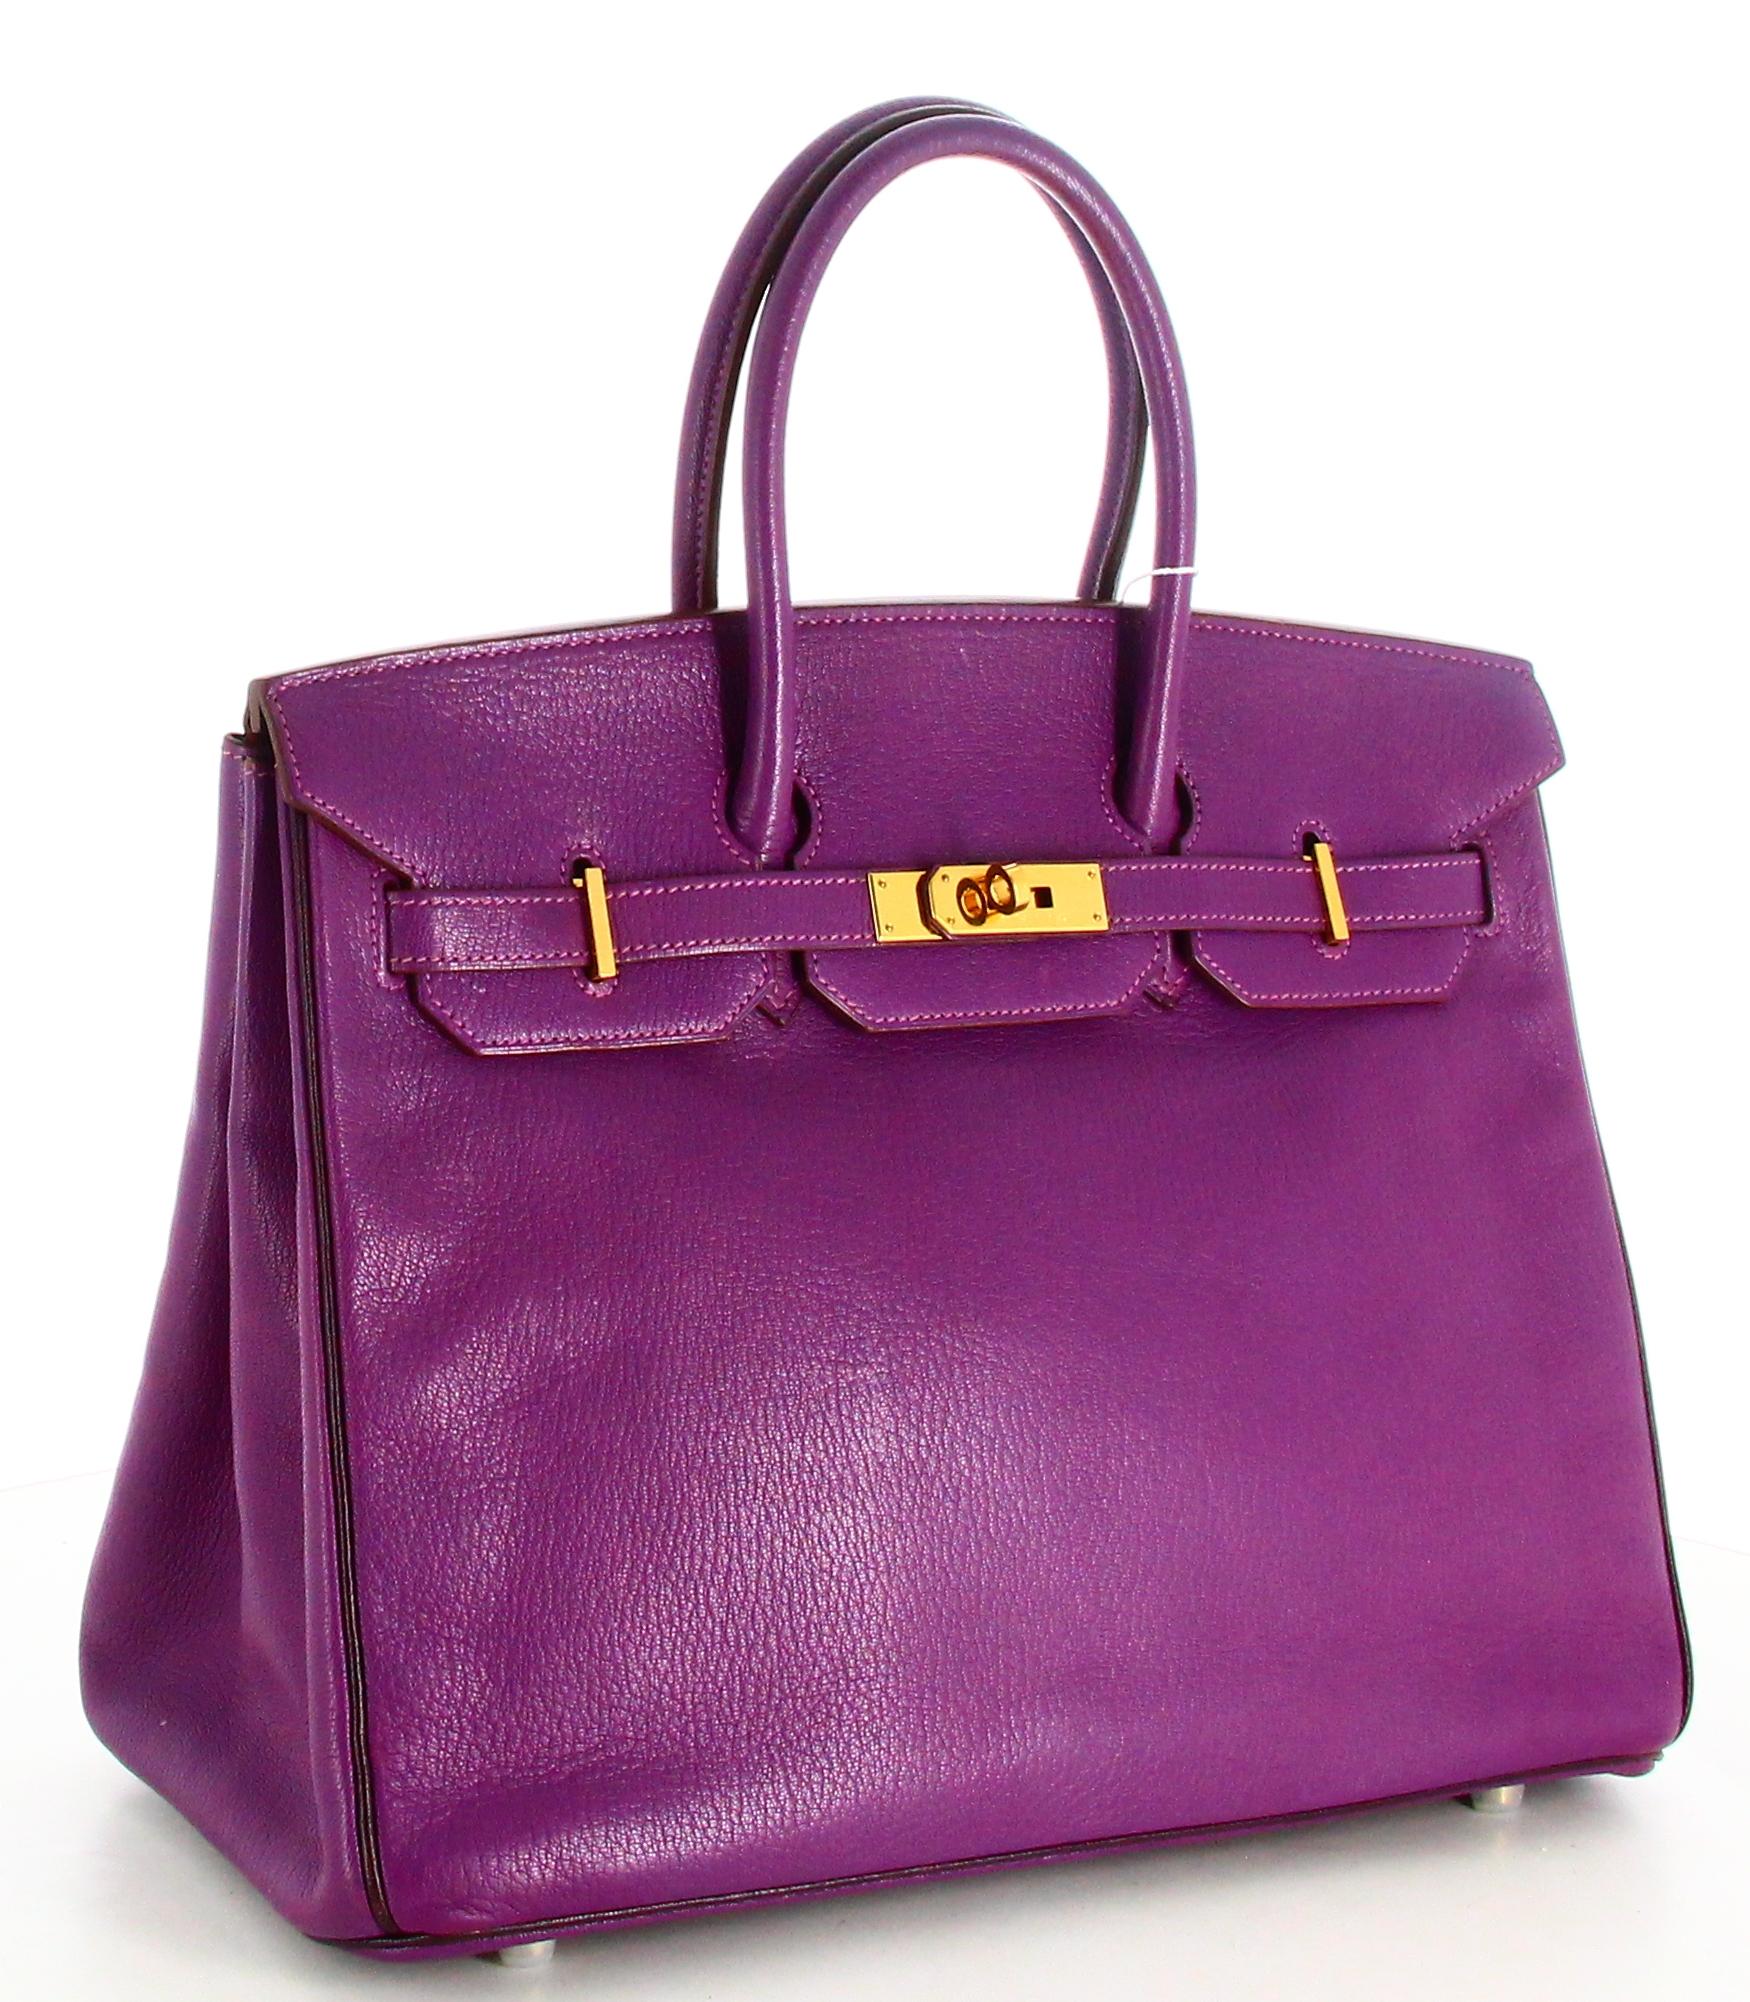 2009 Birkin Handbag Hermès Goat Mysore Size 35 Leather Purple

- Very good condition. Shows slight signs of wear over time.
- Hermes Birkin Handbag
- Size : 35
- Color: purple
- Two leather handles 
- Clasp: golden